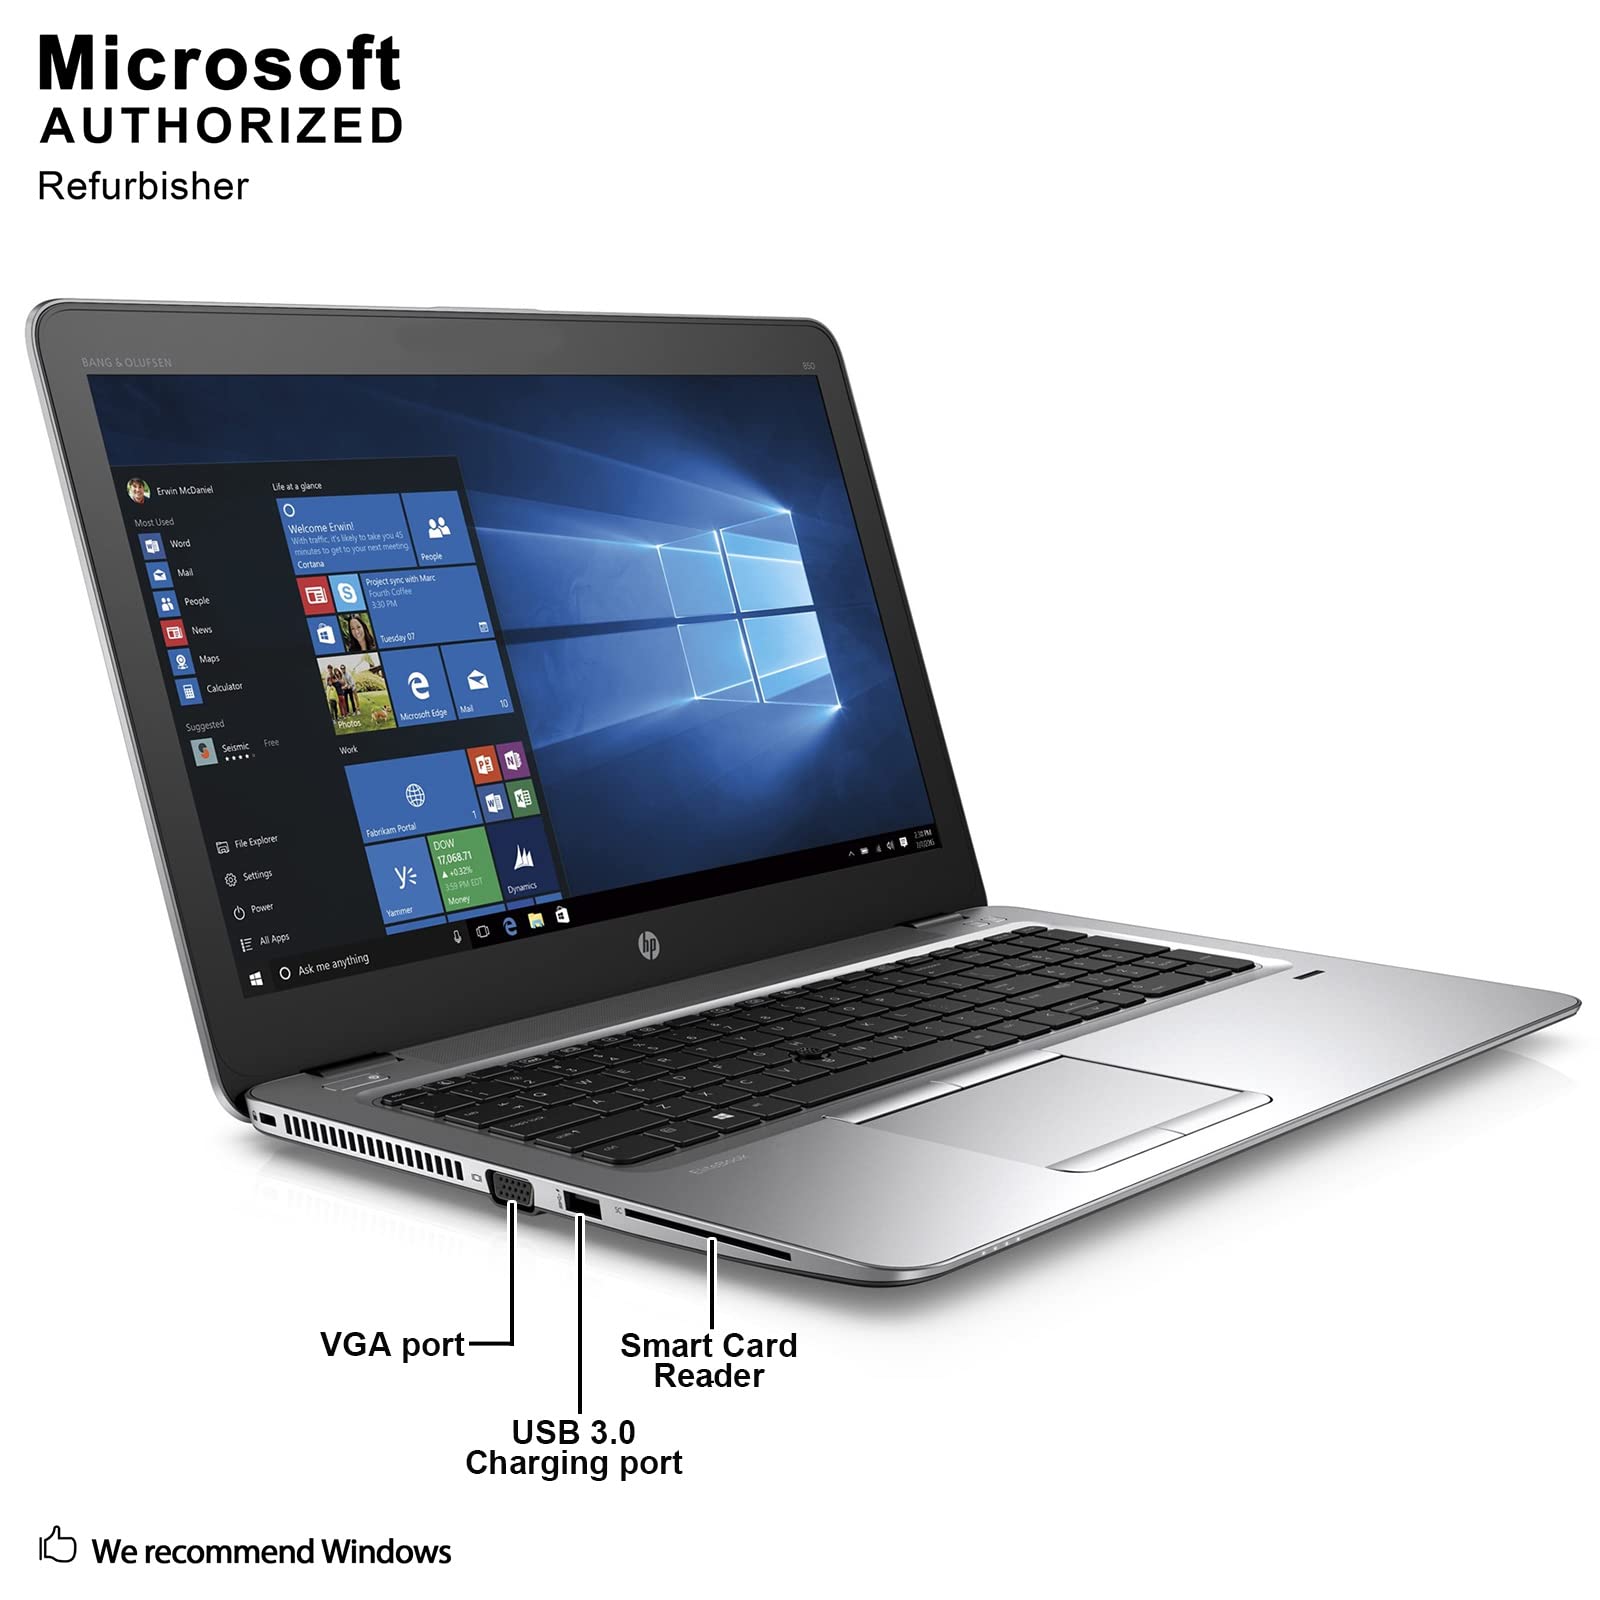 HP 850 G3 15.6 inches Laptop, Core i5-6200U 2.3GHz, 8GB RAM, 256GB Solid State Drive, Windows 10 Pro 64bit(Renewed)